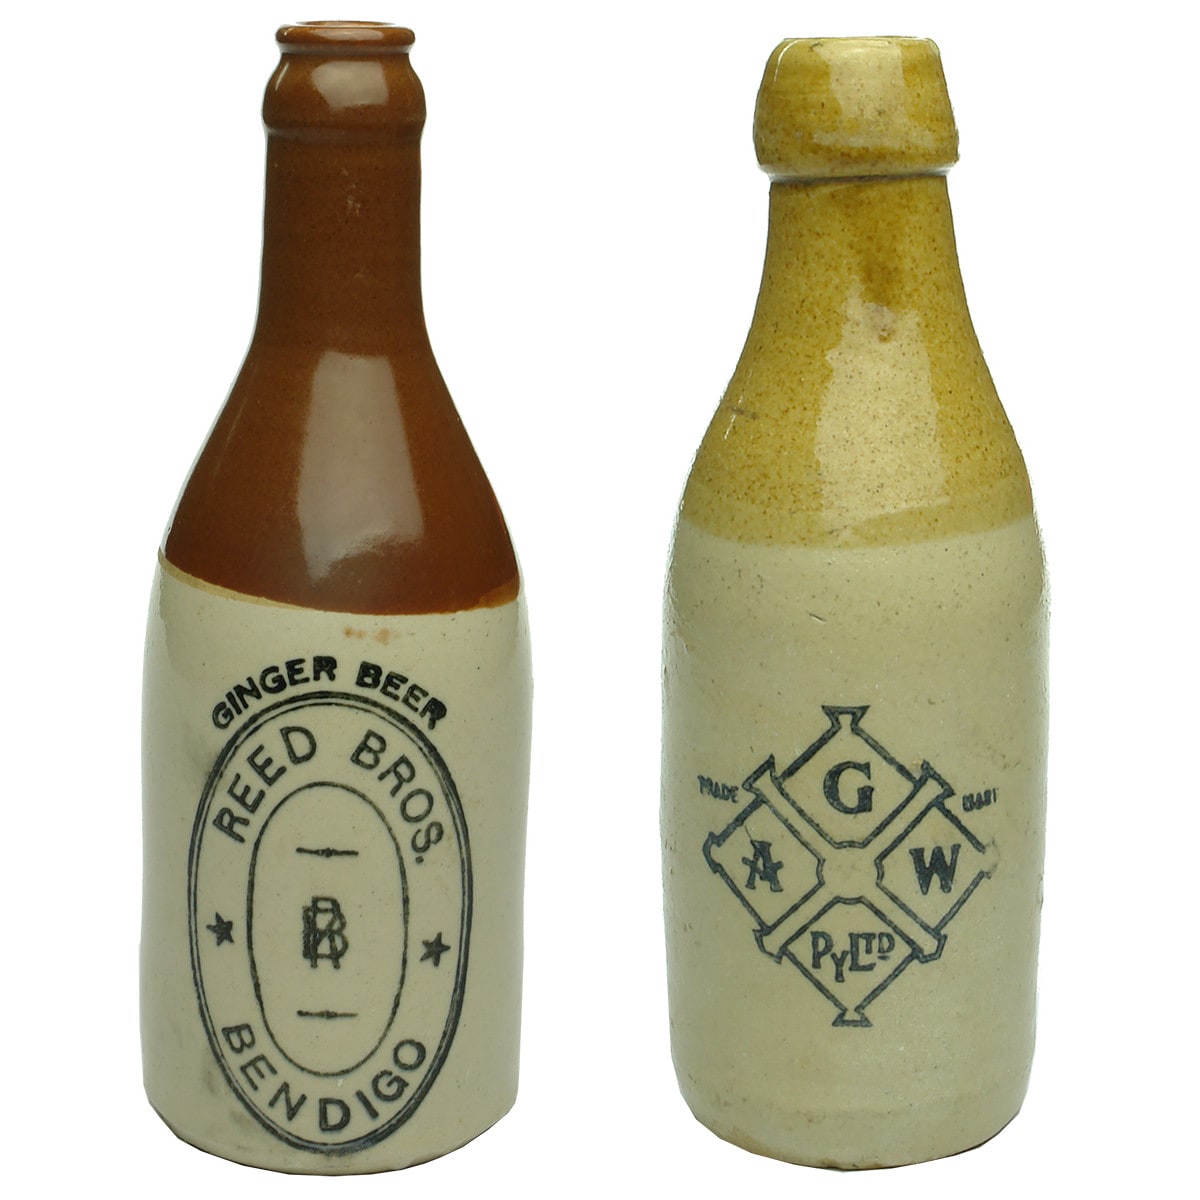 Pair of Ginger Beers: Reed Bros, Bendigo and Geelong Aerated Waters. (Victoria)